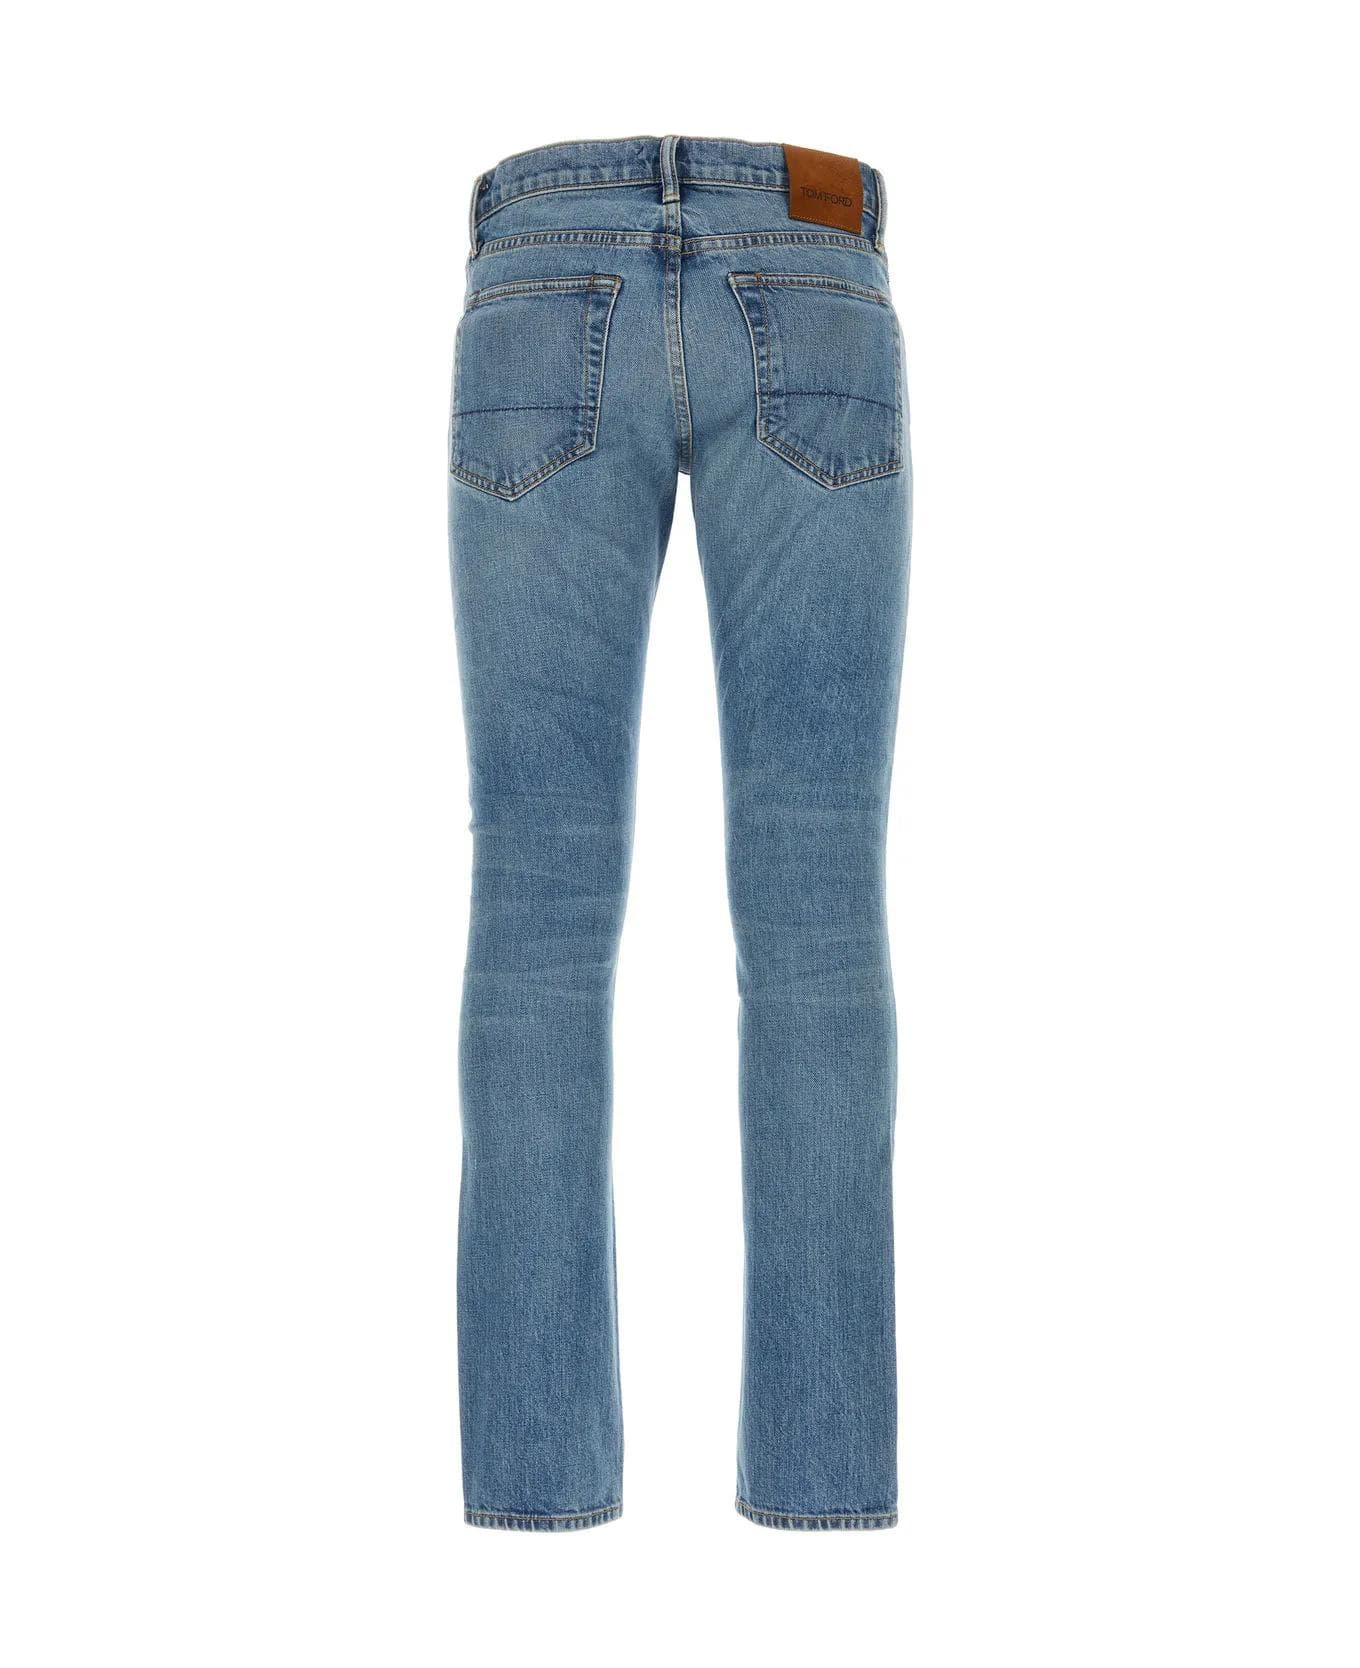 Tom Ford Denim Jeans - Light blue